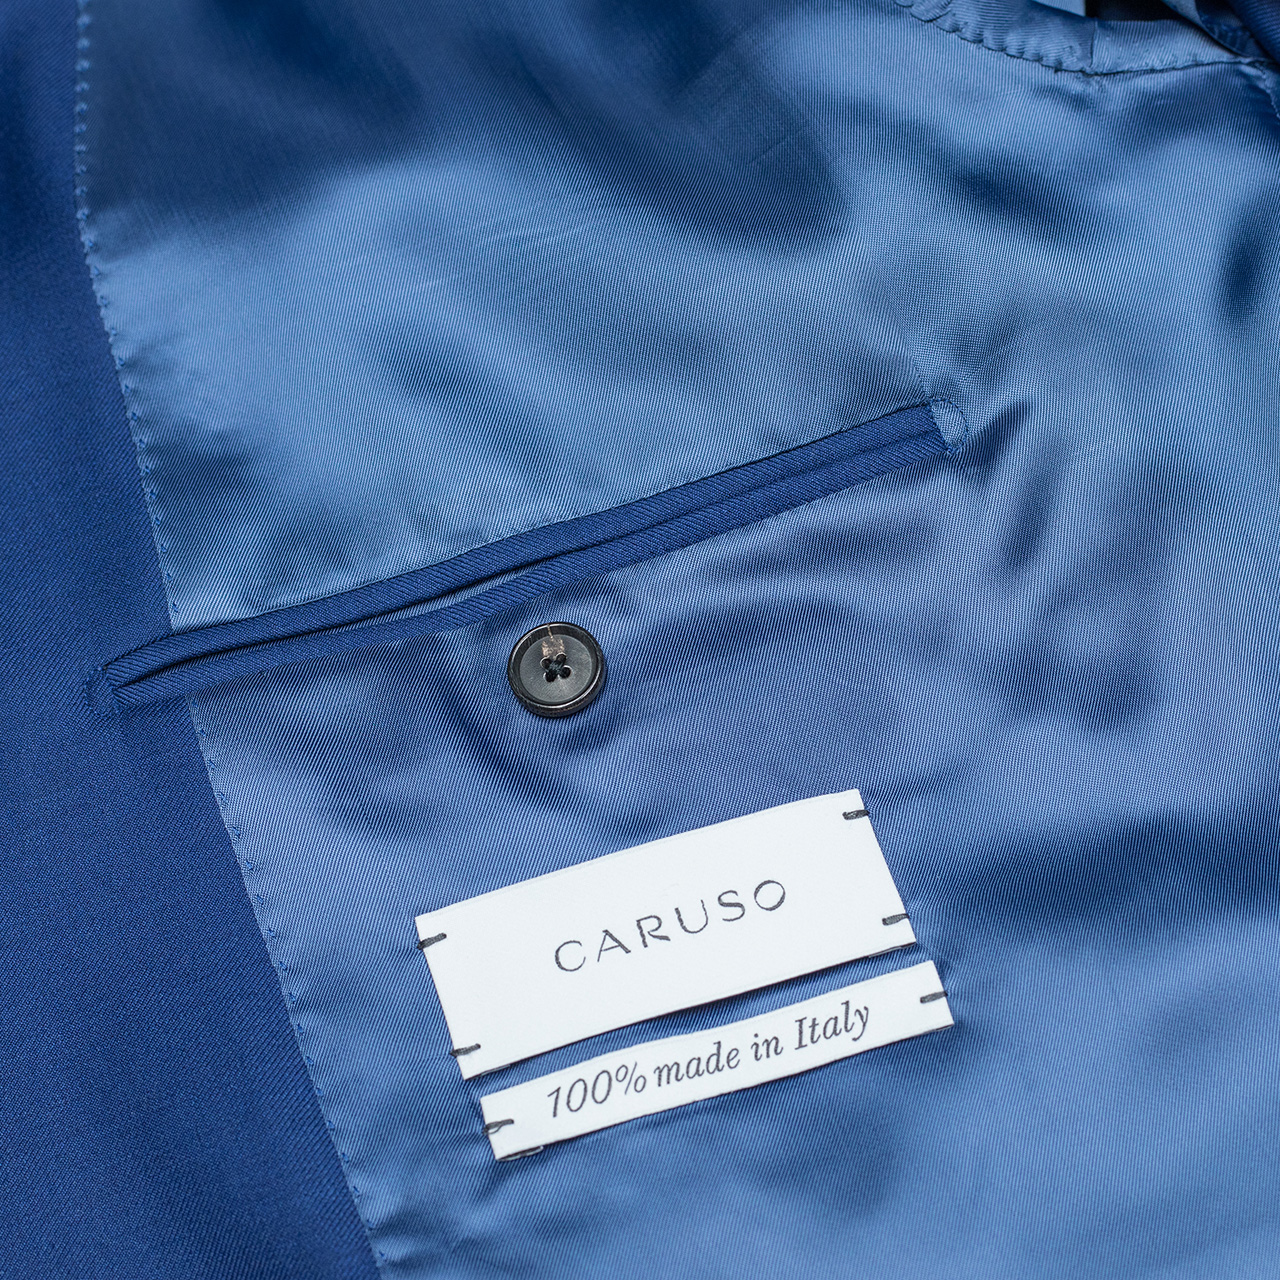 Caruso Anzug in napoliblau aus "Connaisseur Superfine 130'S" Wolle